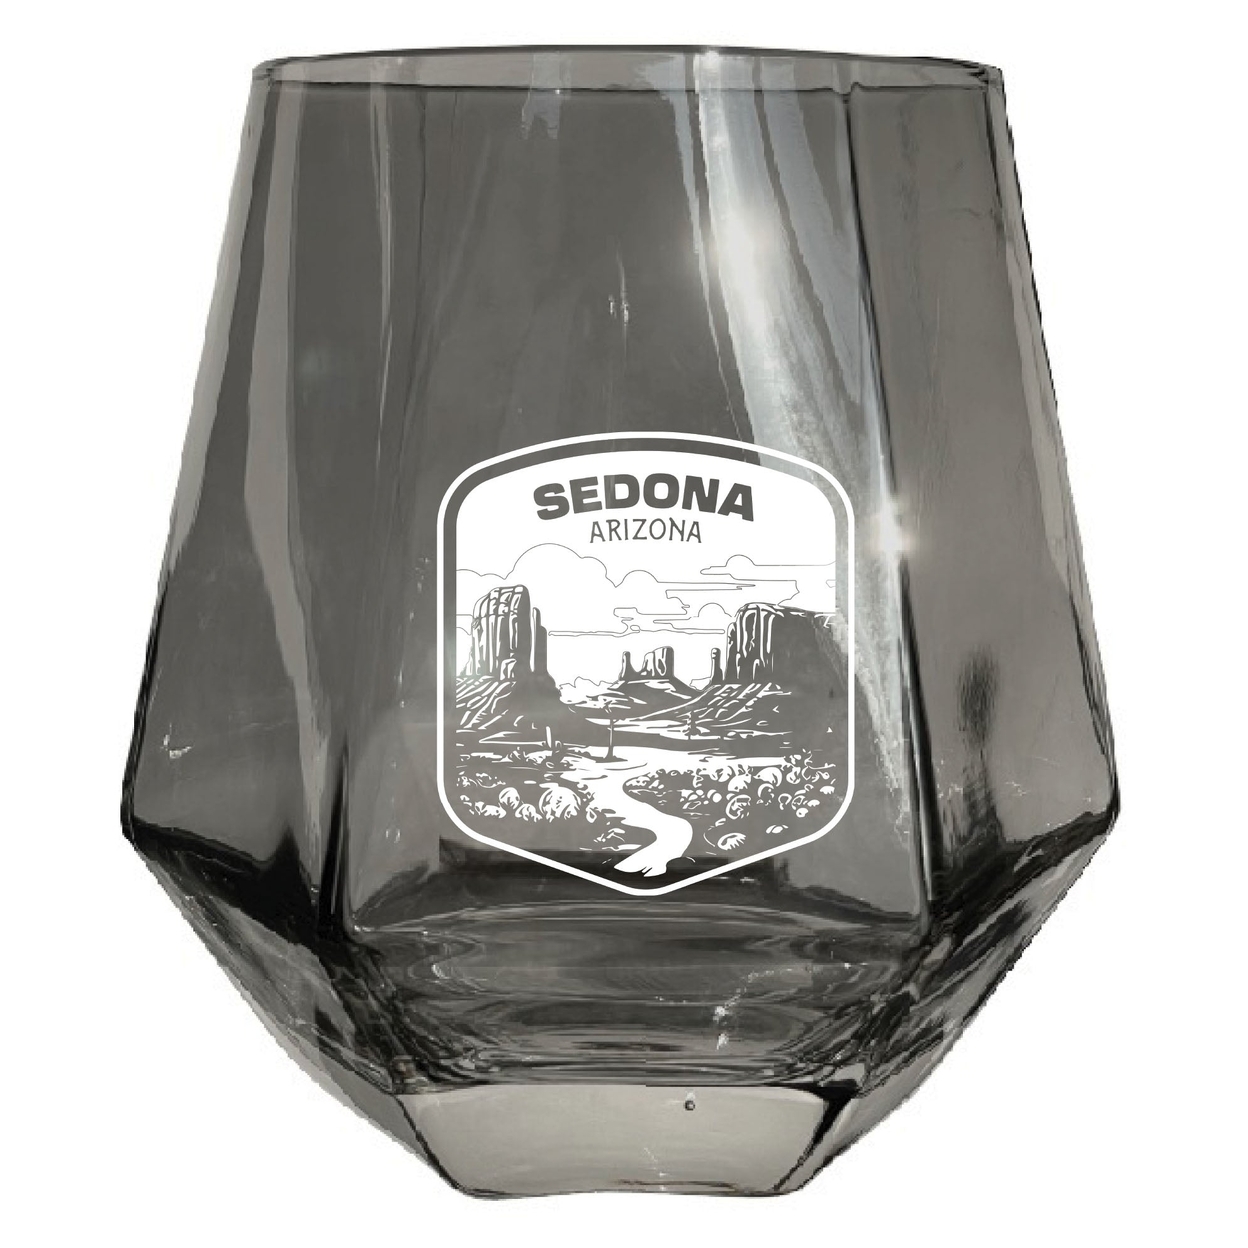 Sedona Arizona Souvenir Wine Glass EngravedDiamond 15 Oz Clear Iridescent - Clear,,2-Pack